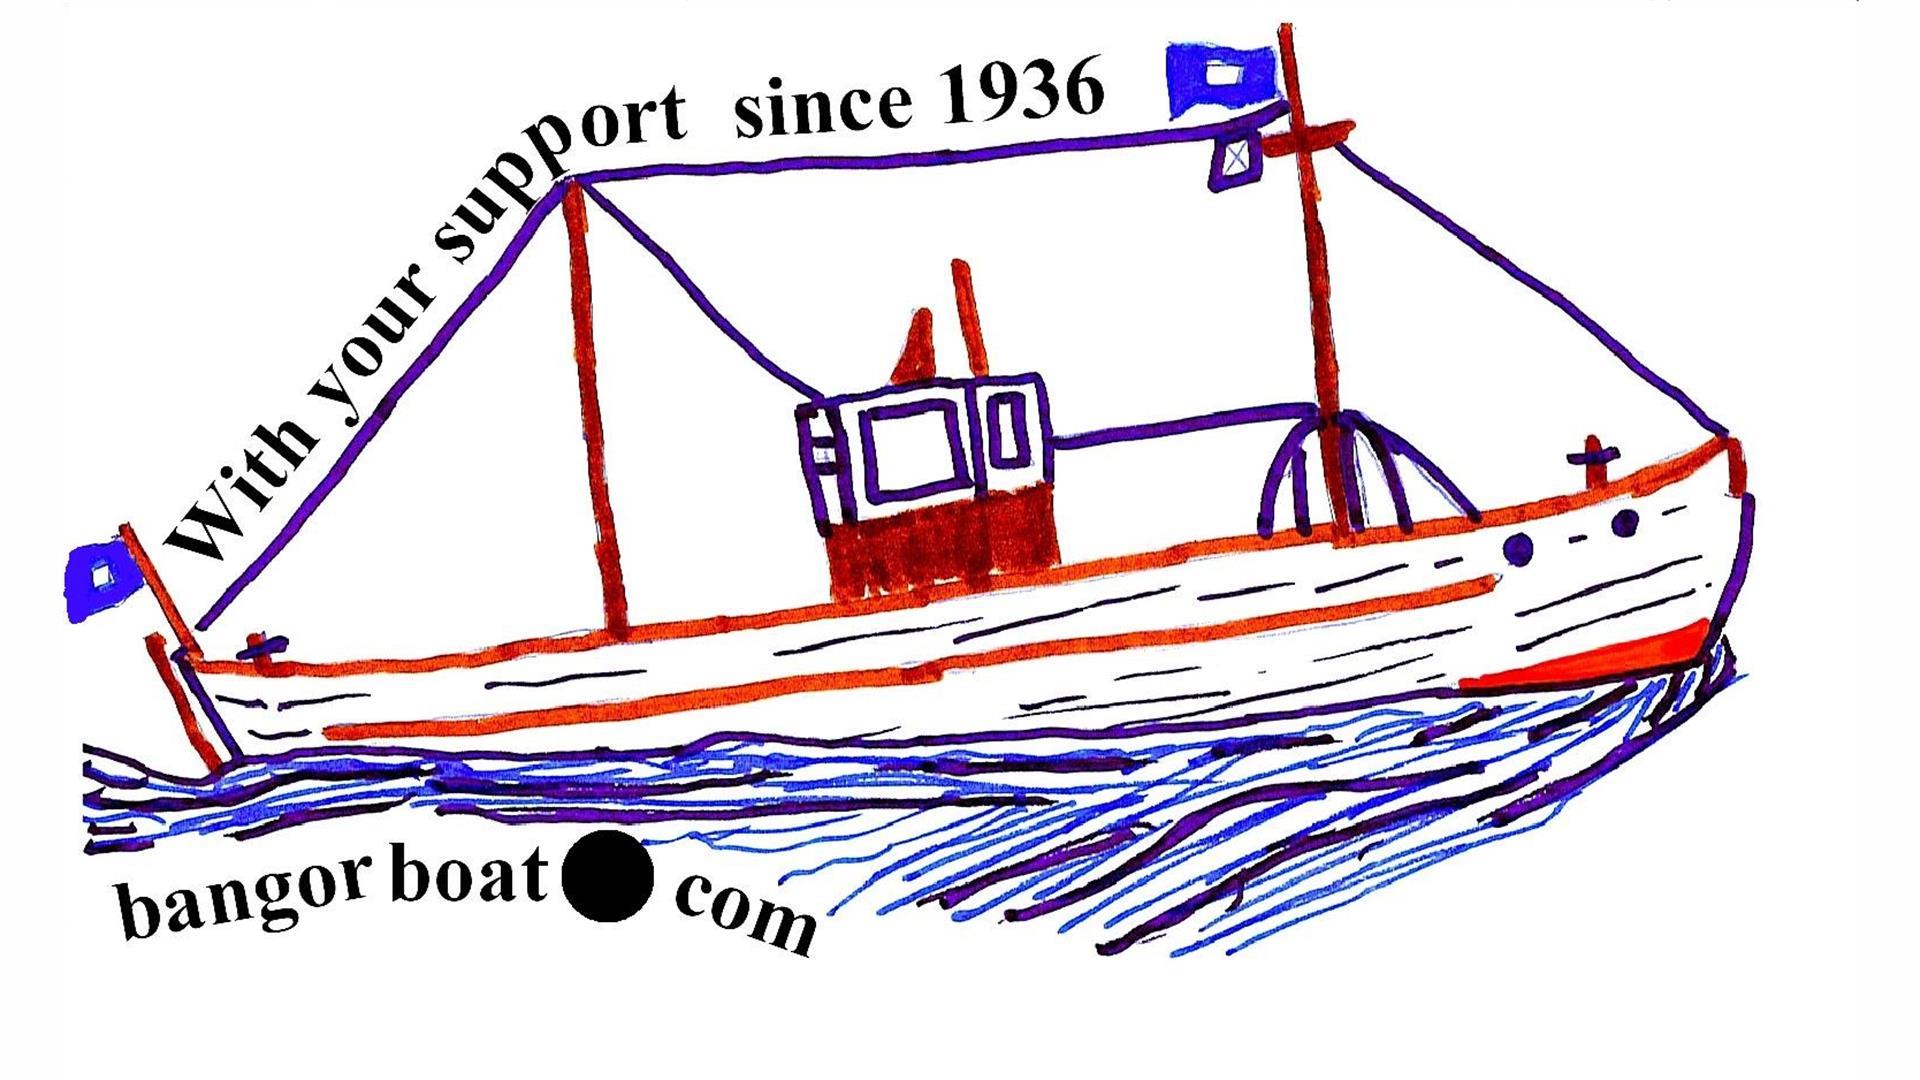 Bangor Boat